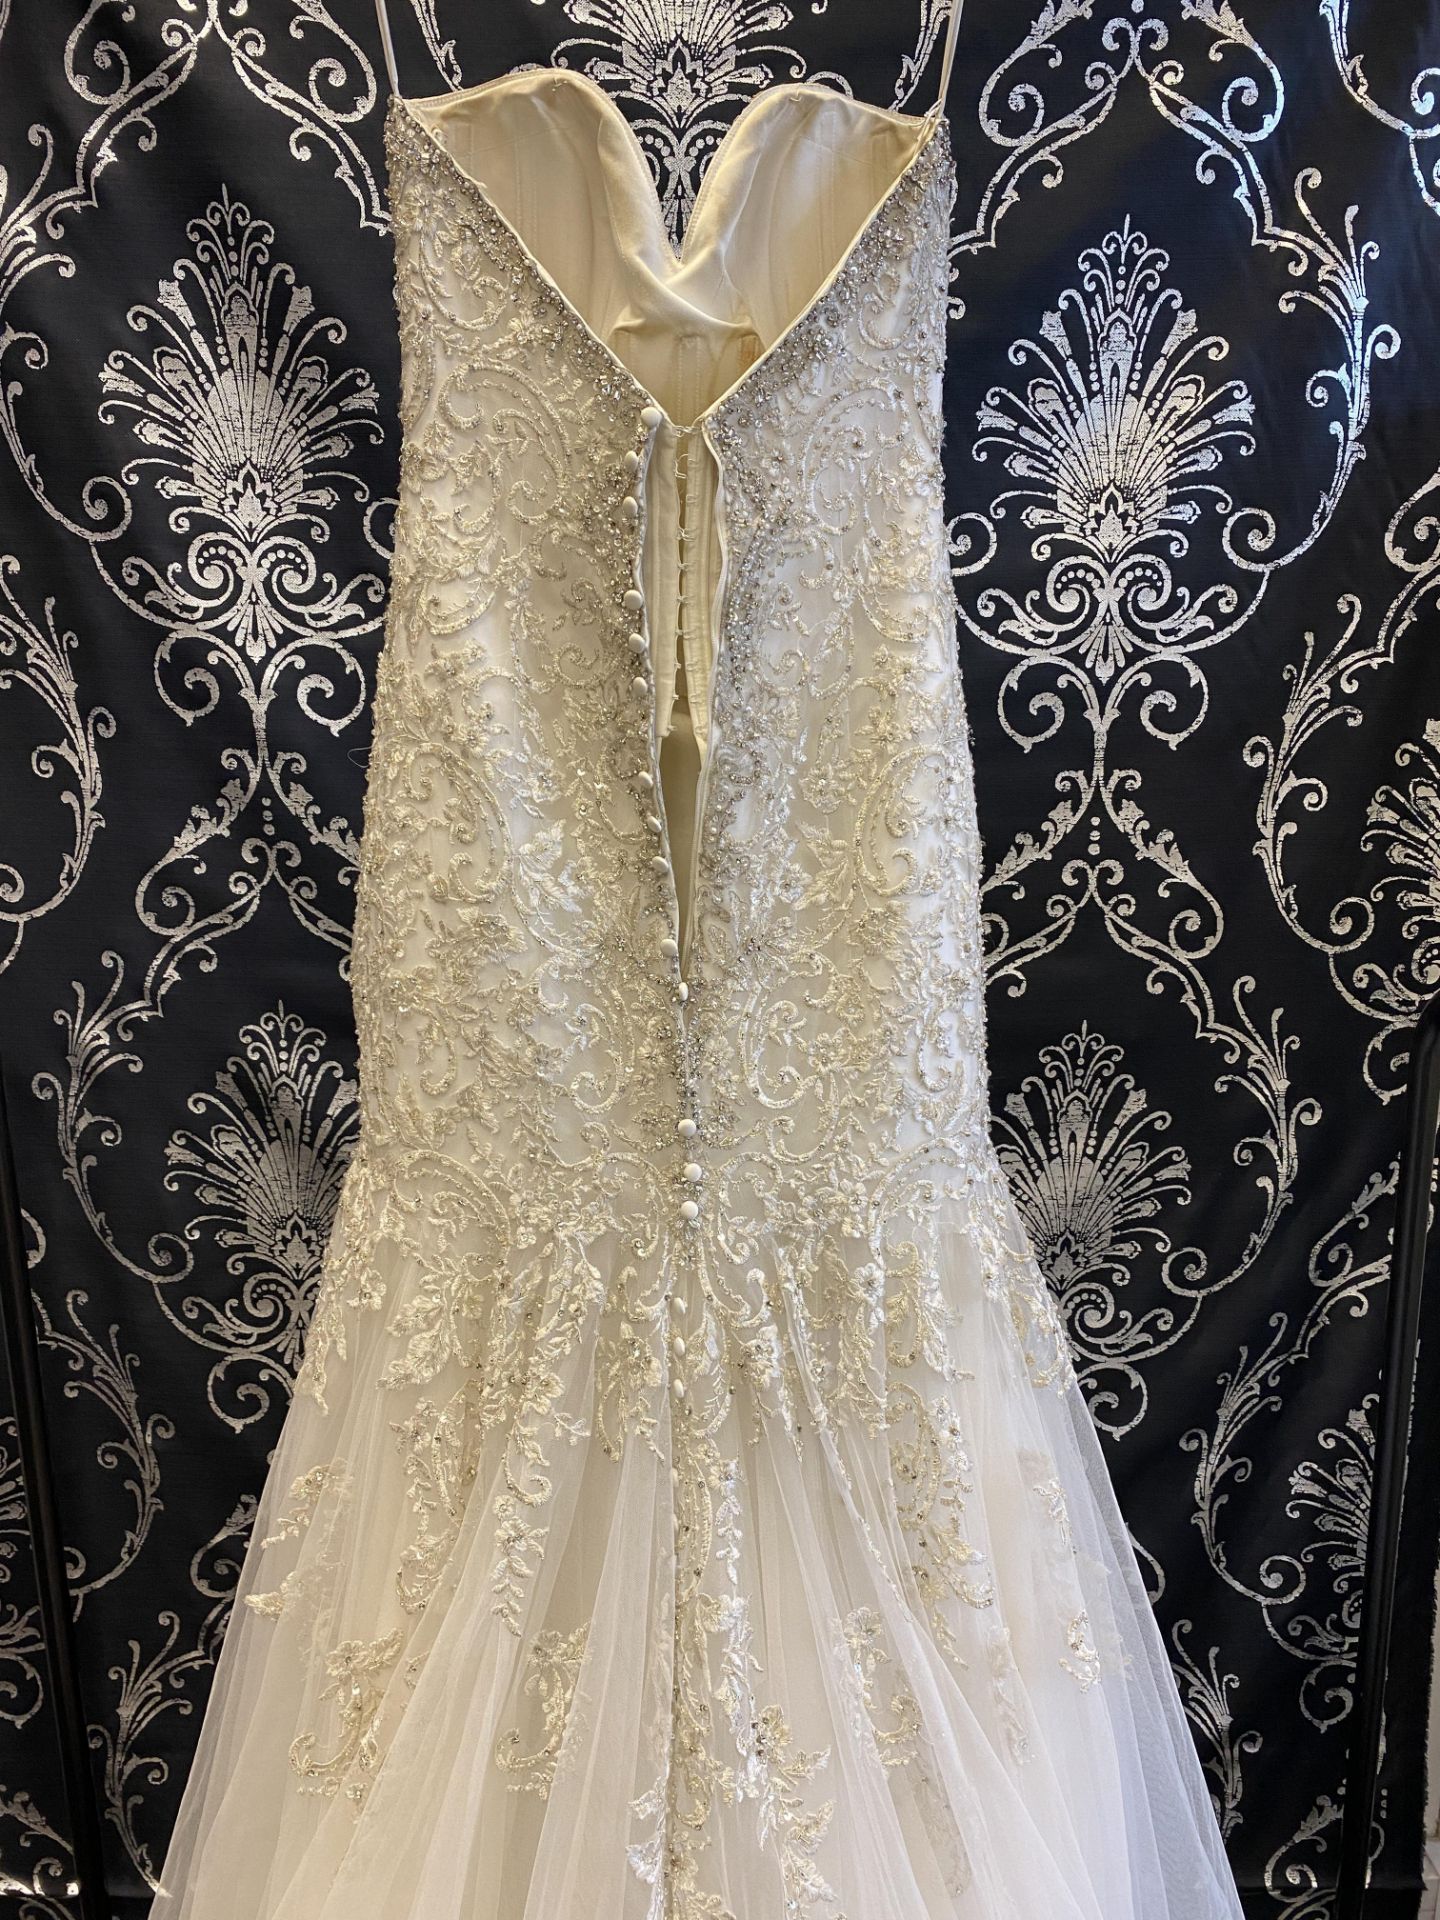 1 x ALLURE '9275' Timeless Strapless Lace And Chiffon Mermaid Designer Wedding Dress RRP £2,250 UK12 - Image 10 of 11